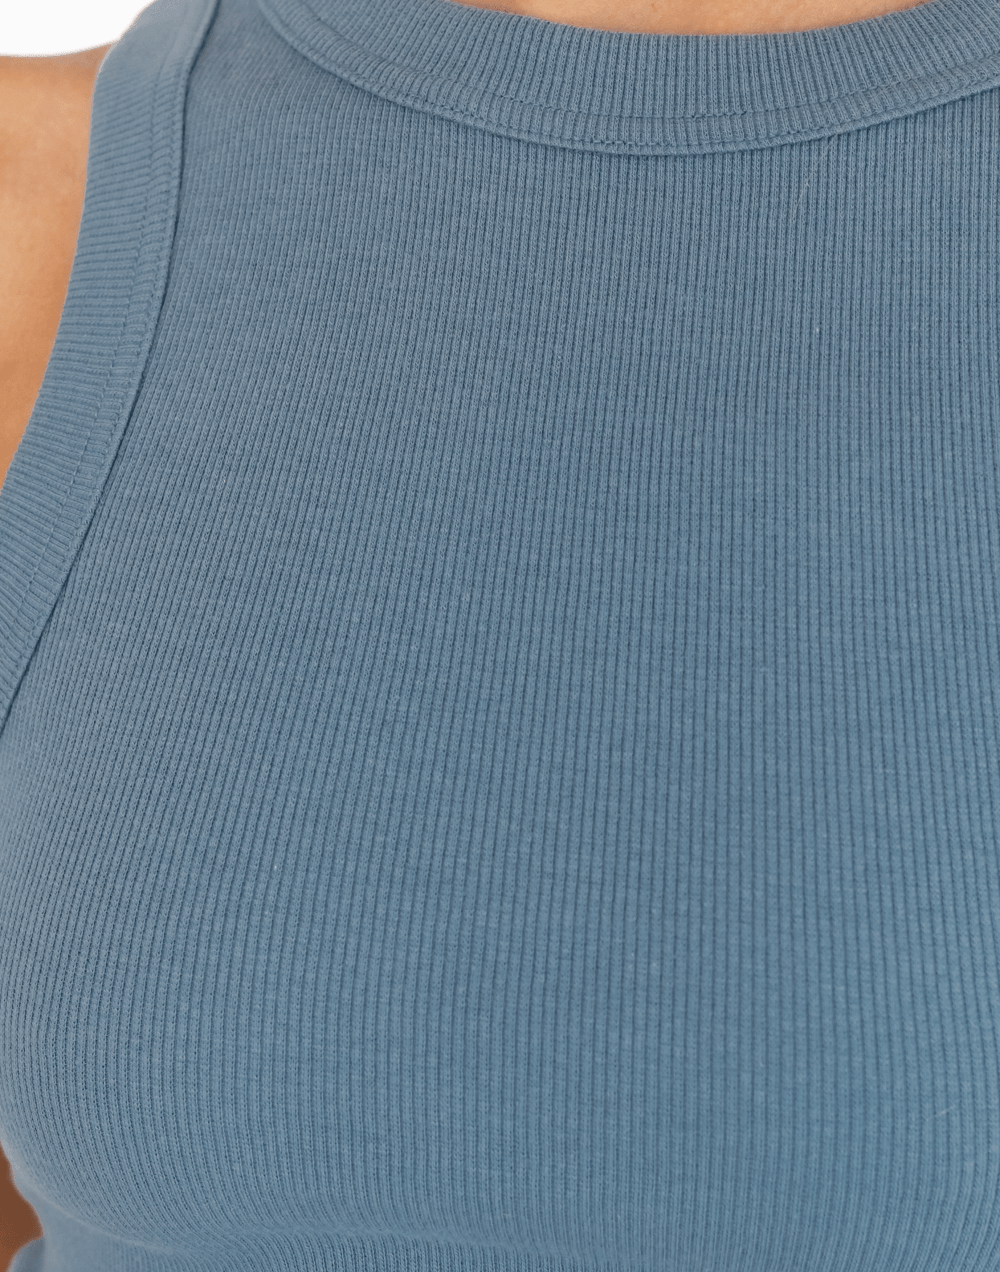 Elijah Tank Top (Steel Blue) - Basic Tank Top - Women's Top - Charcoal Clothing